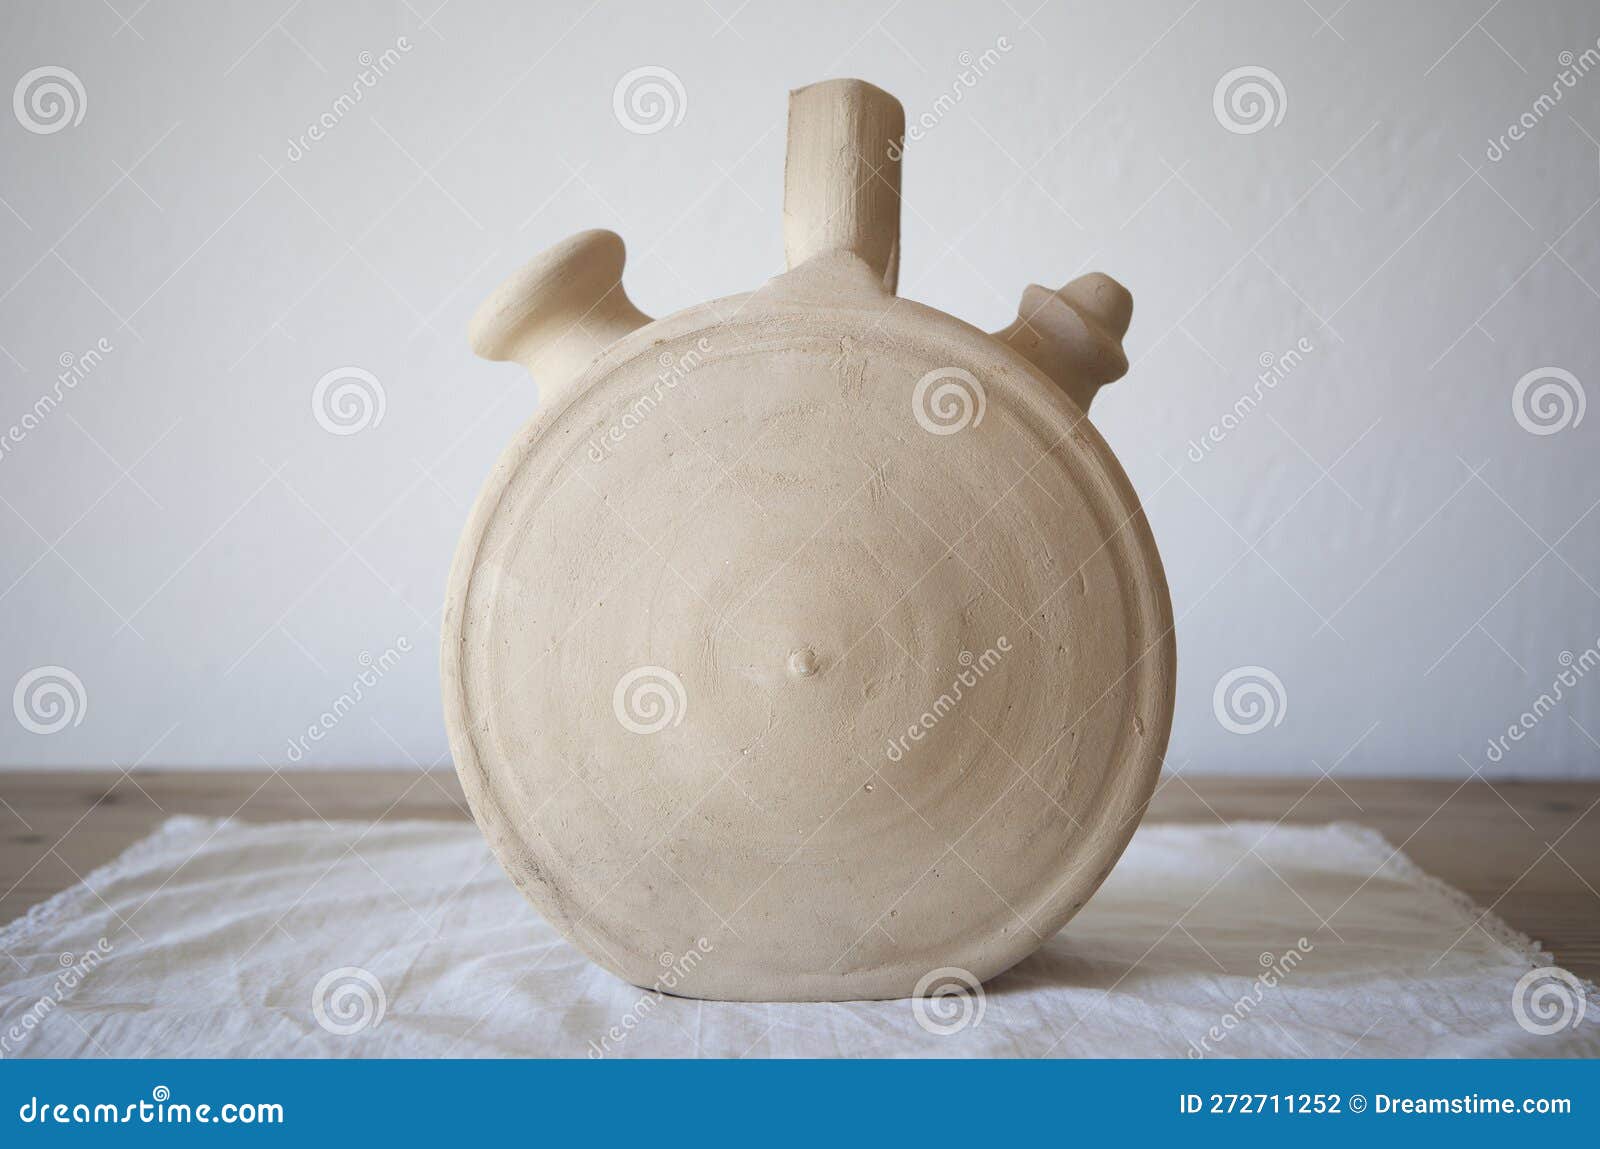 white earthenware botijo, traditional clay pot jug